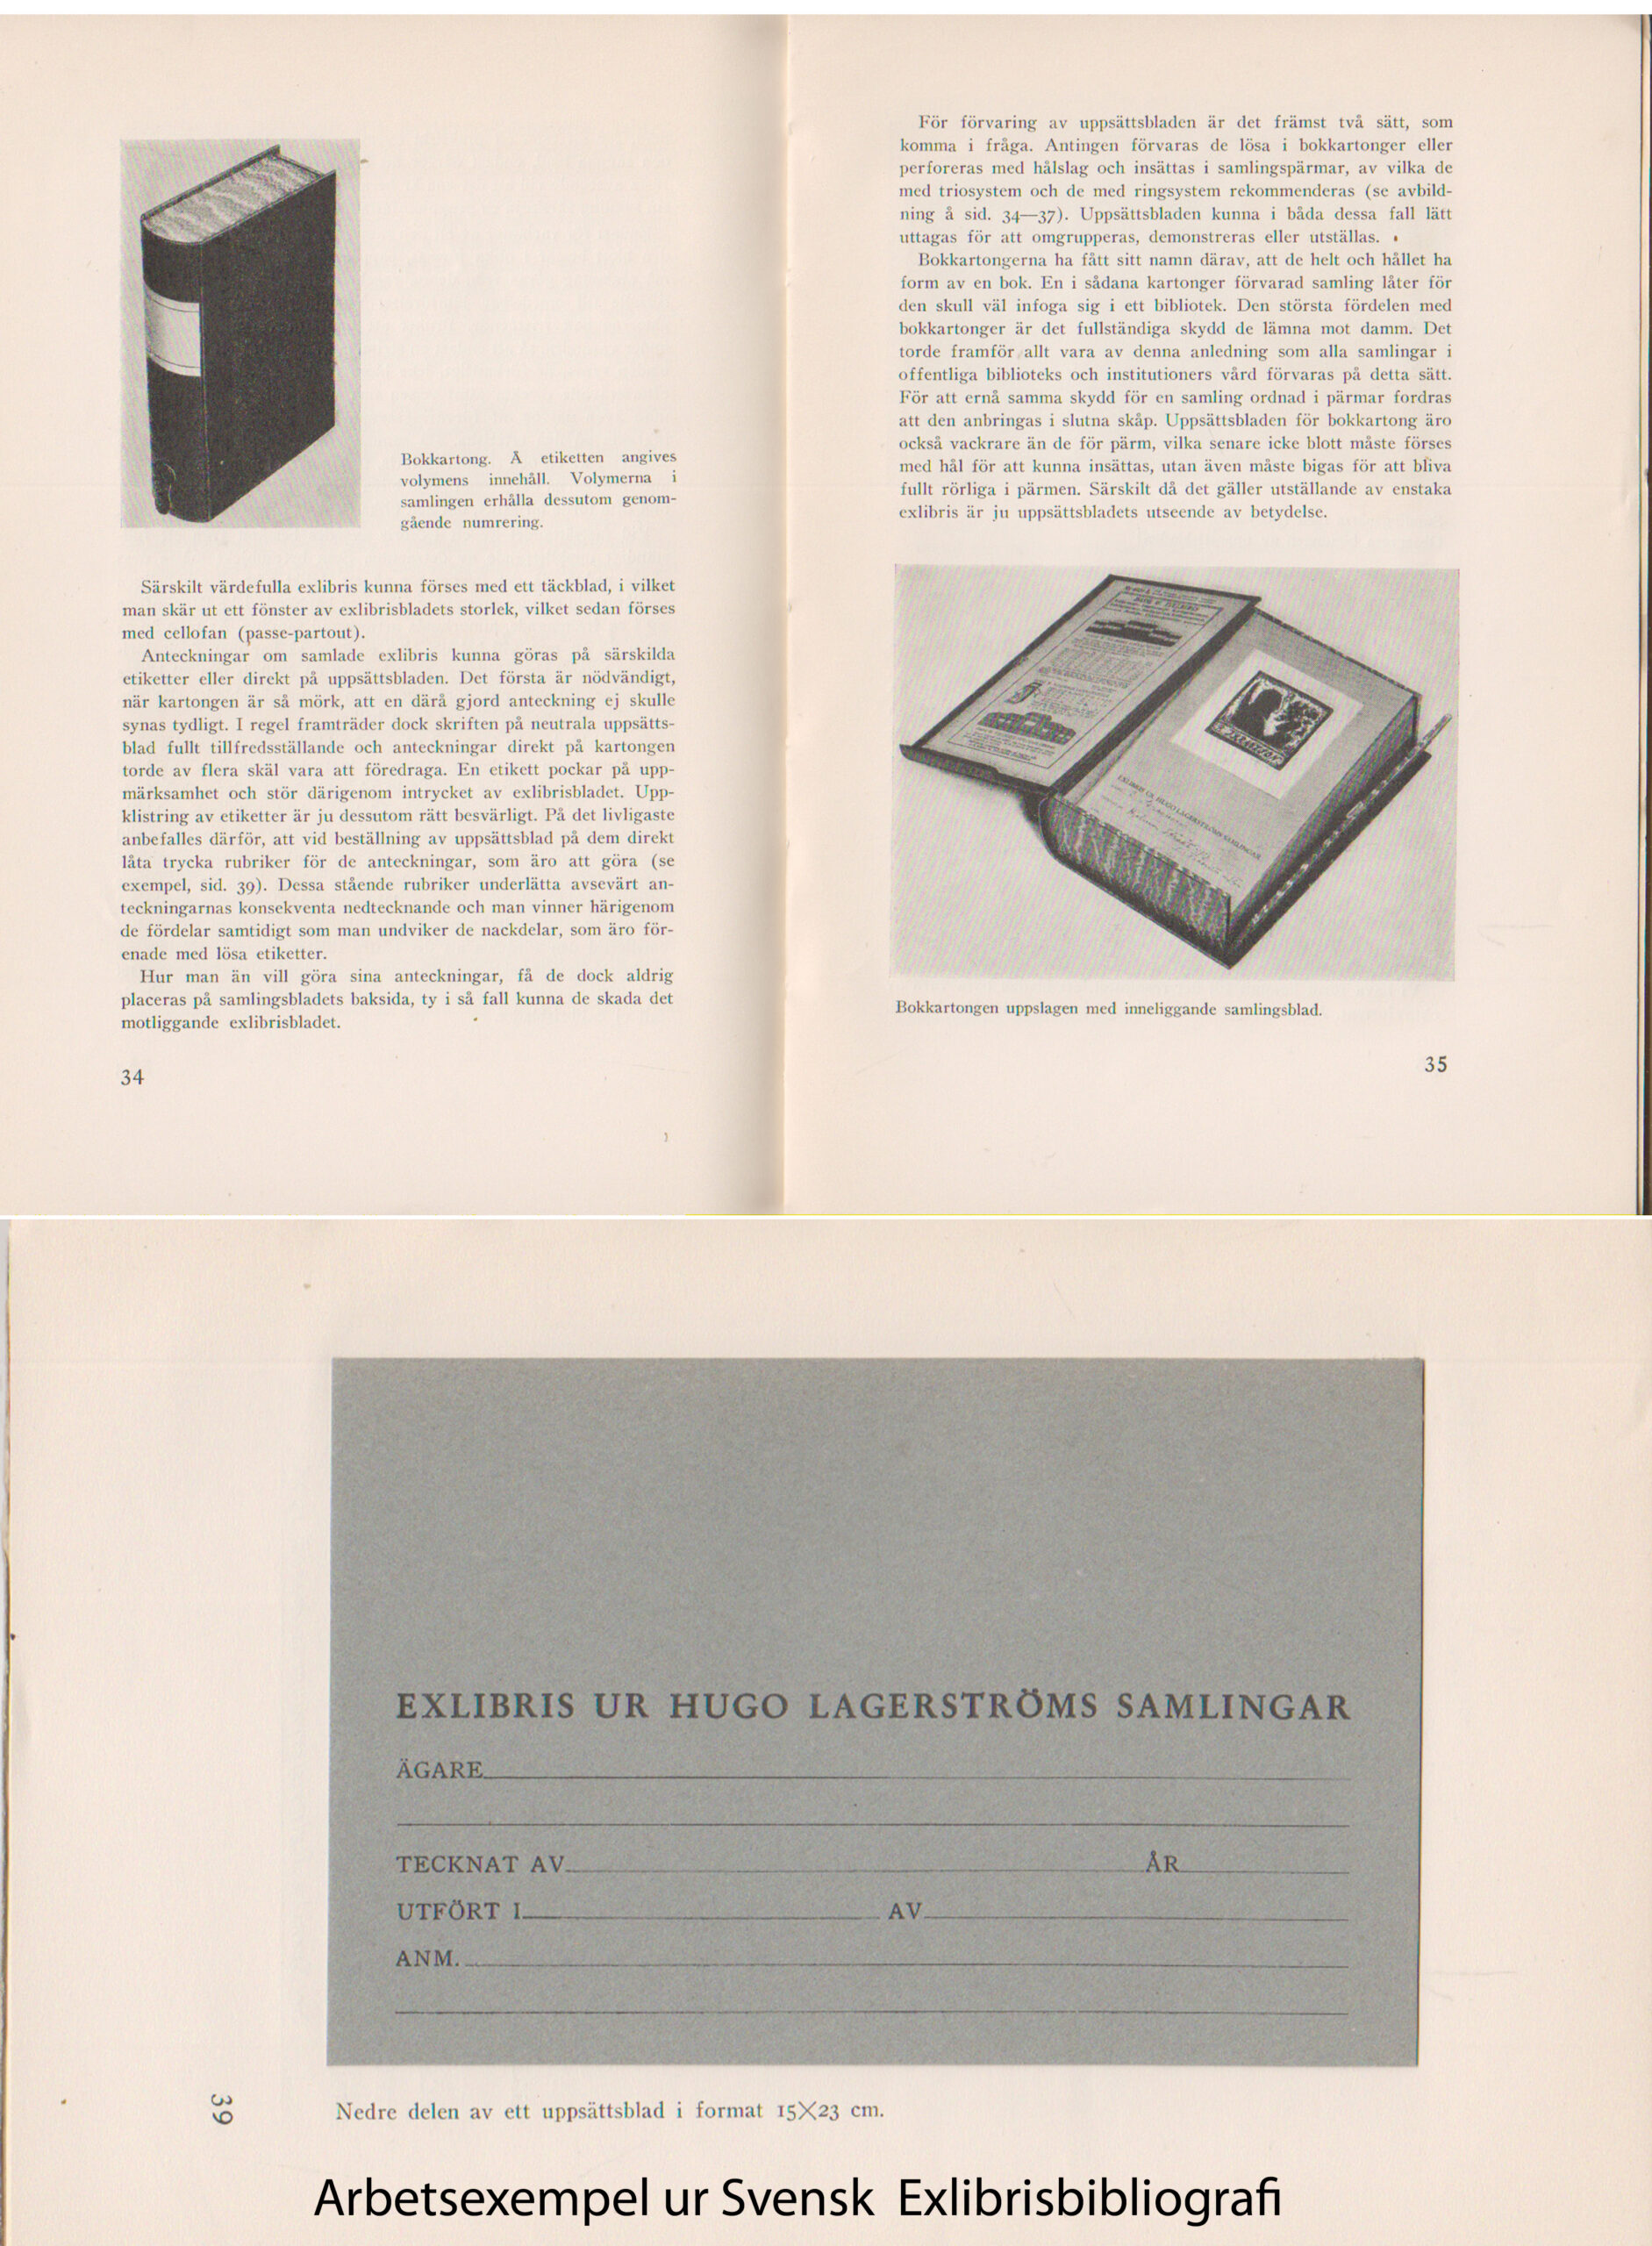 Collage Svensk Exlibrisbibliosrafi